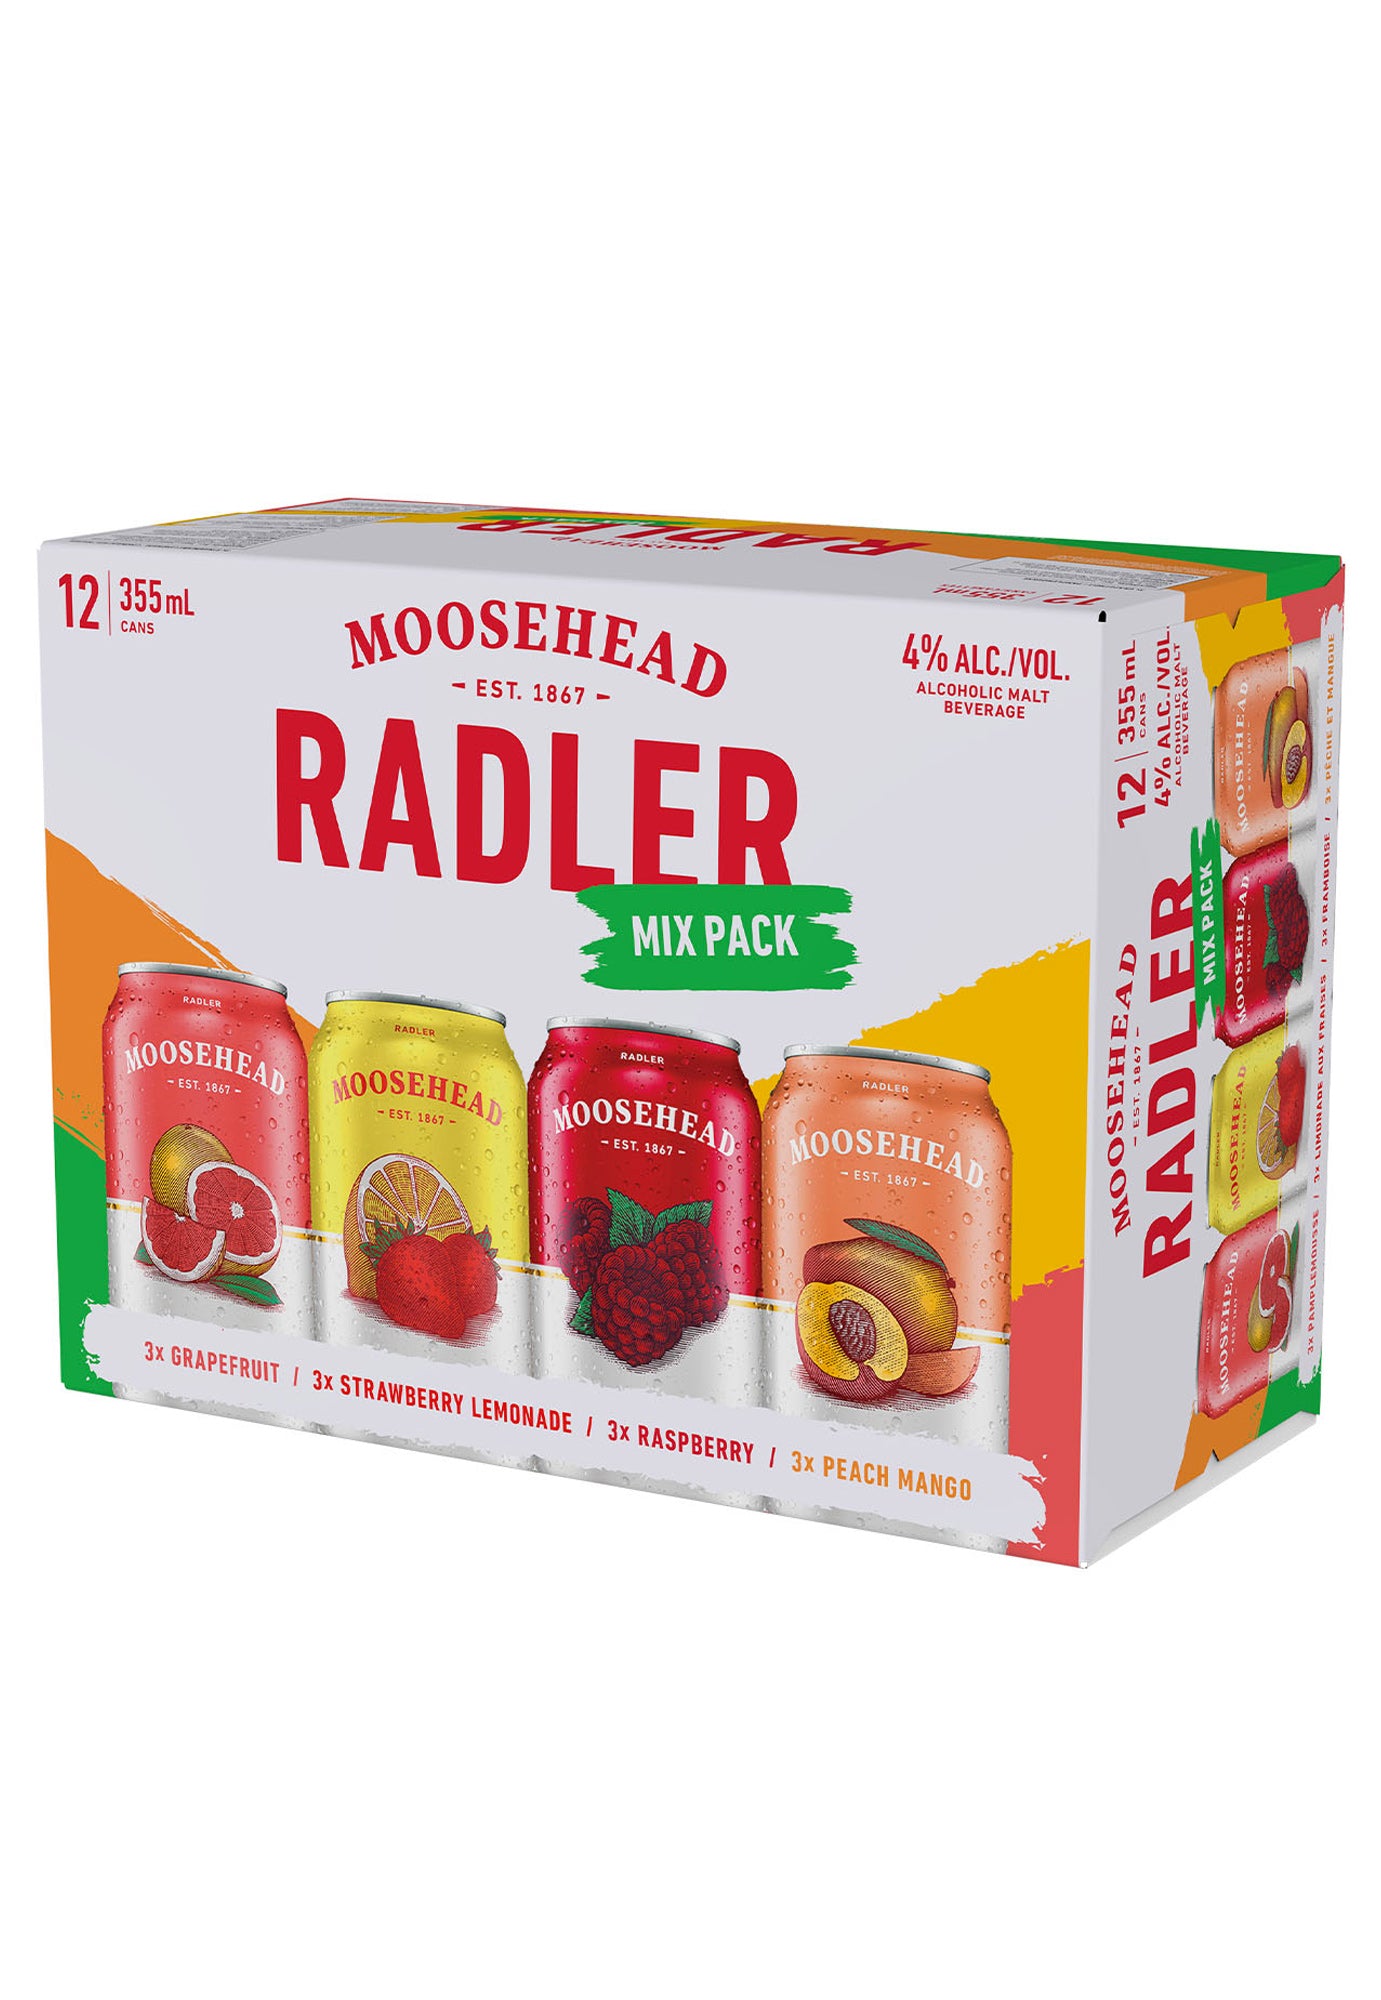 Moosehead Radler Mix Pack 355 ml - 12 Cans